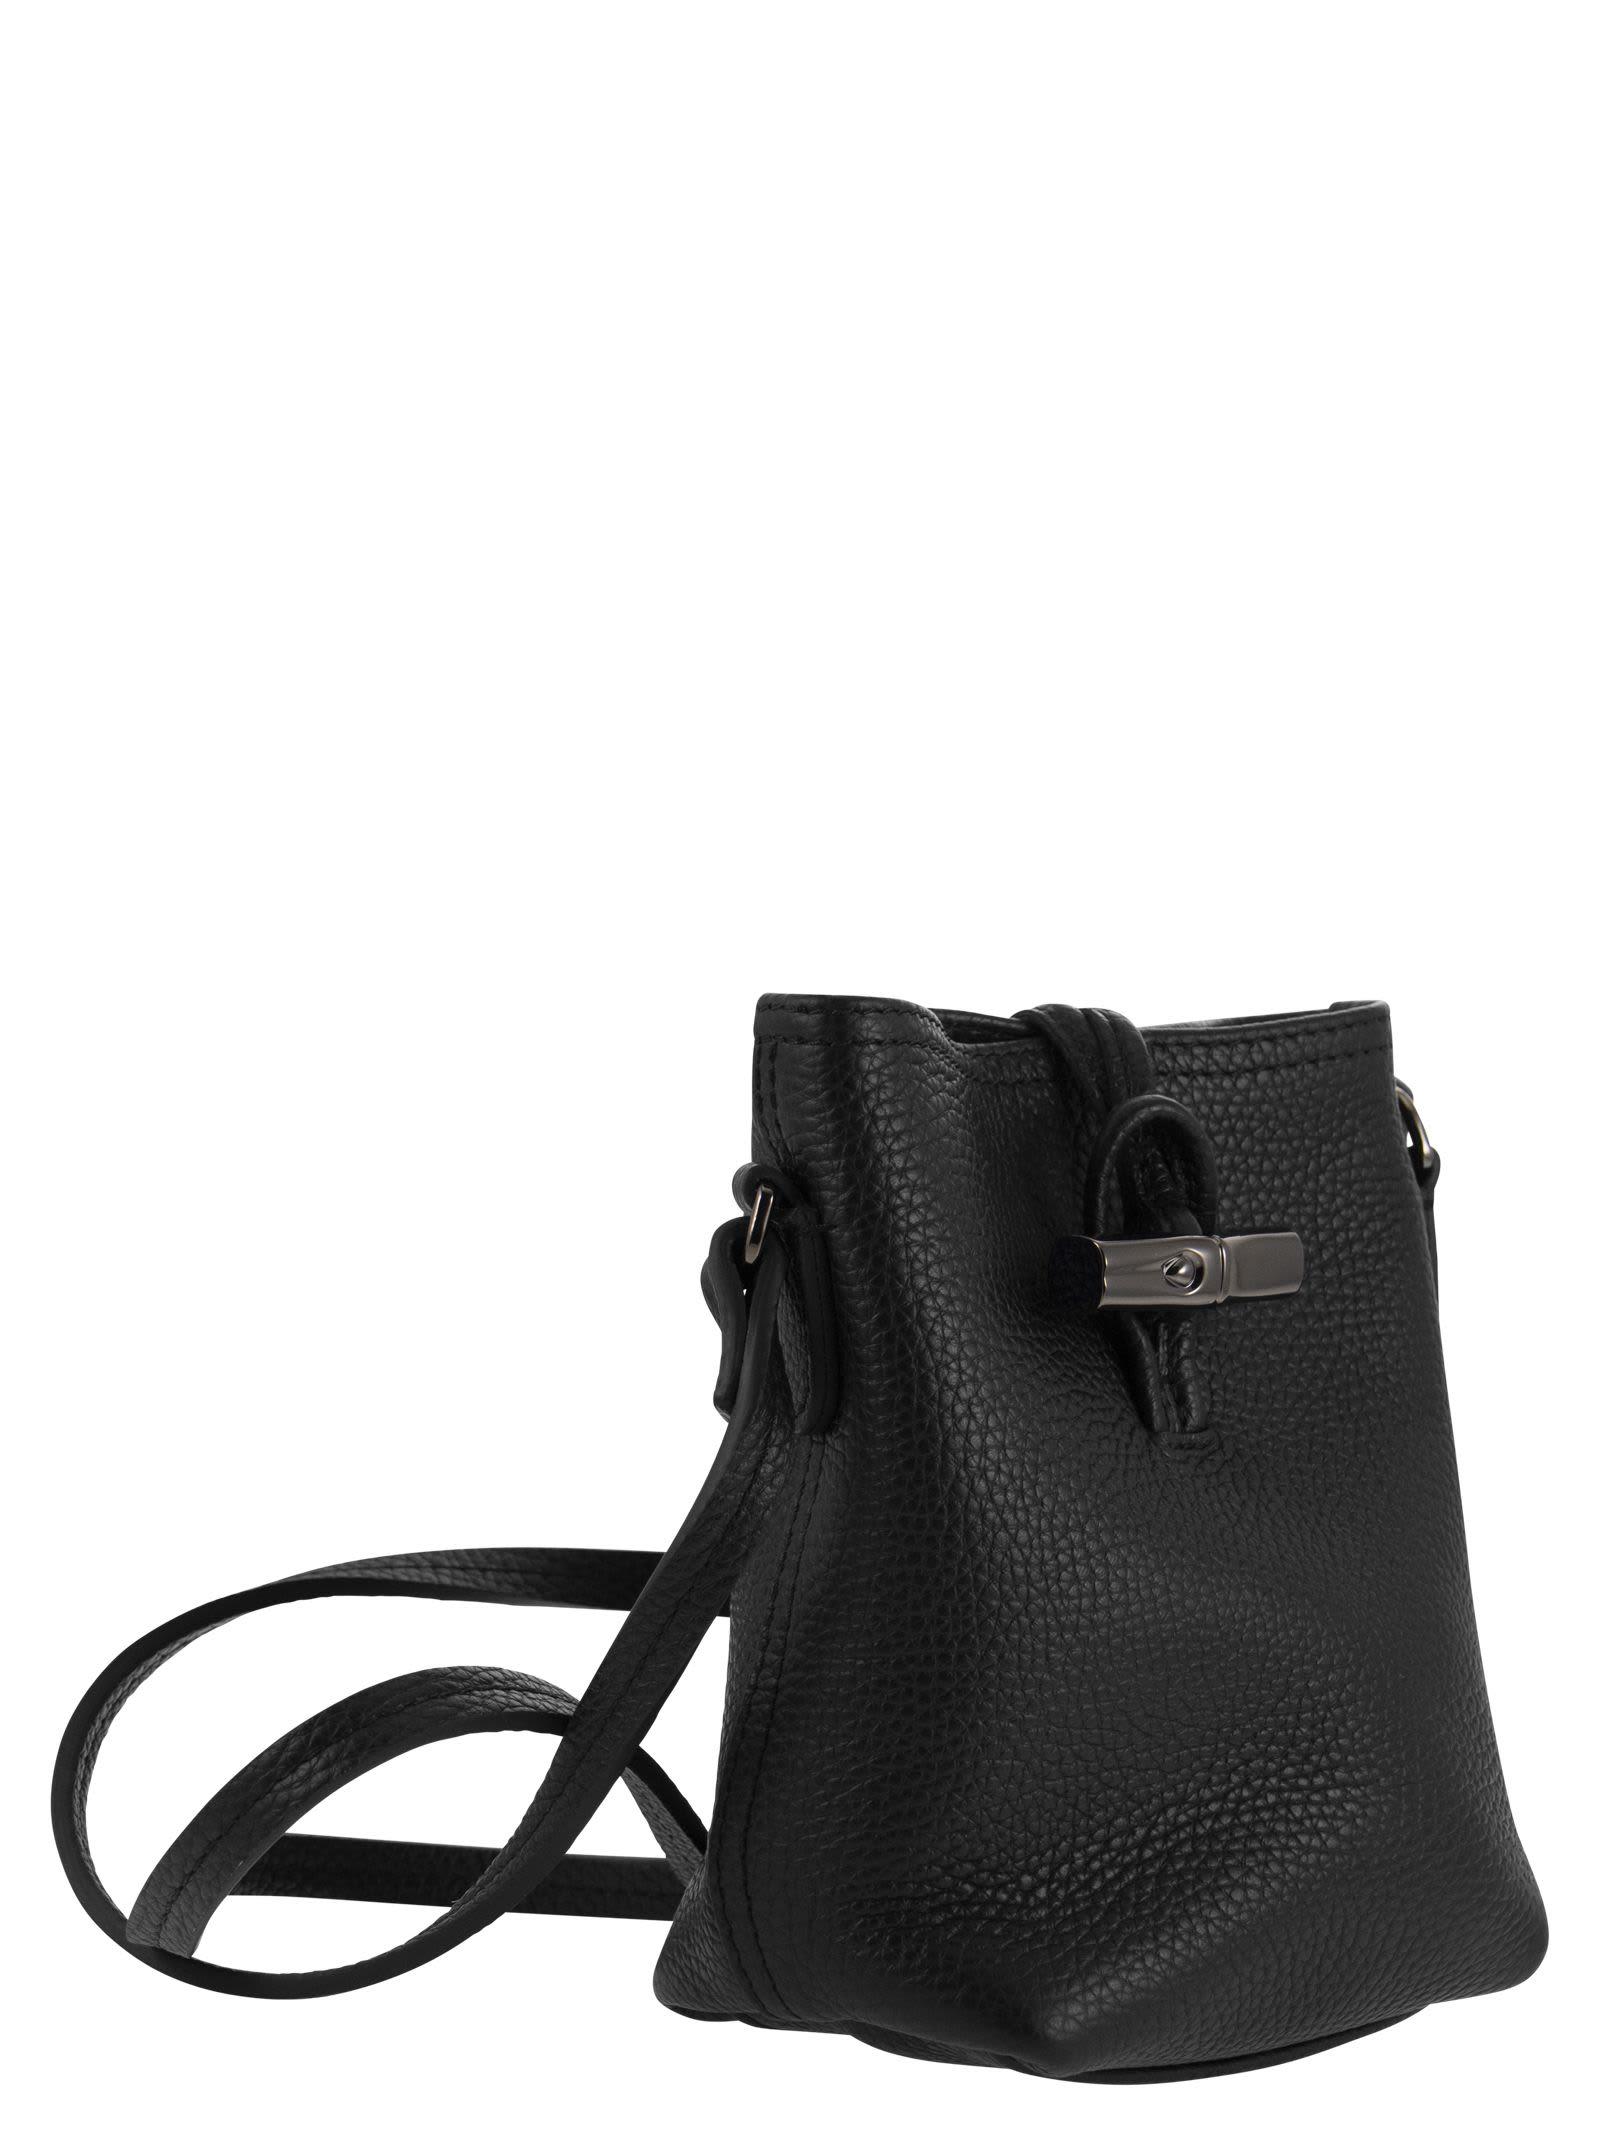 Longchamp Roseau Essential Leather Bucket Bag In Black